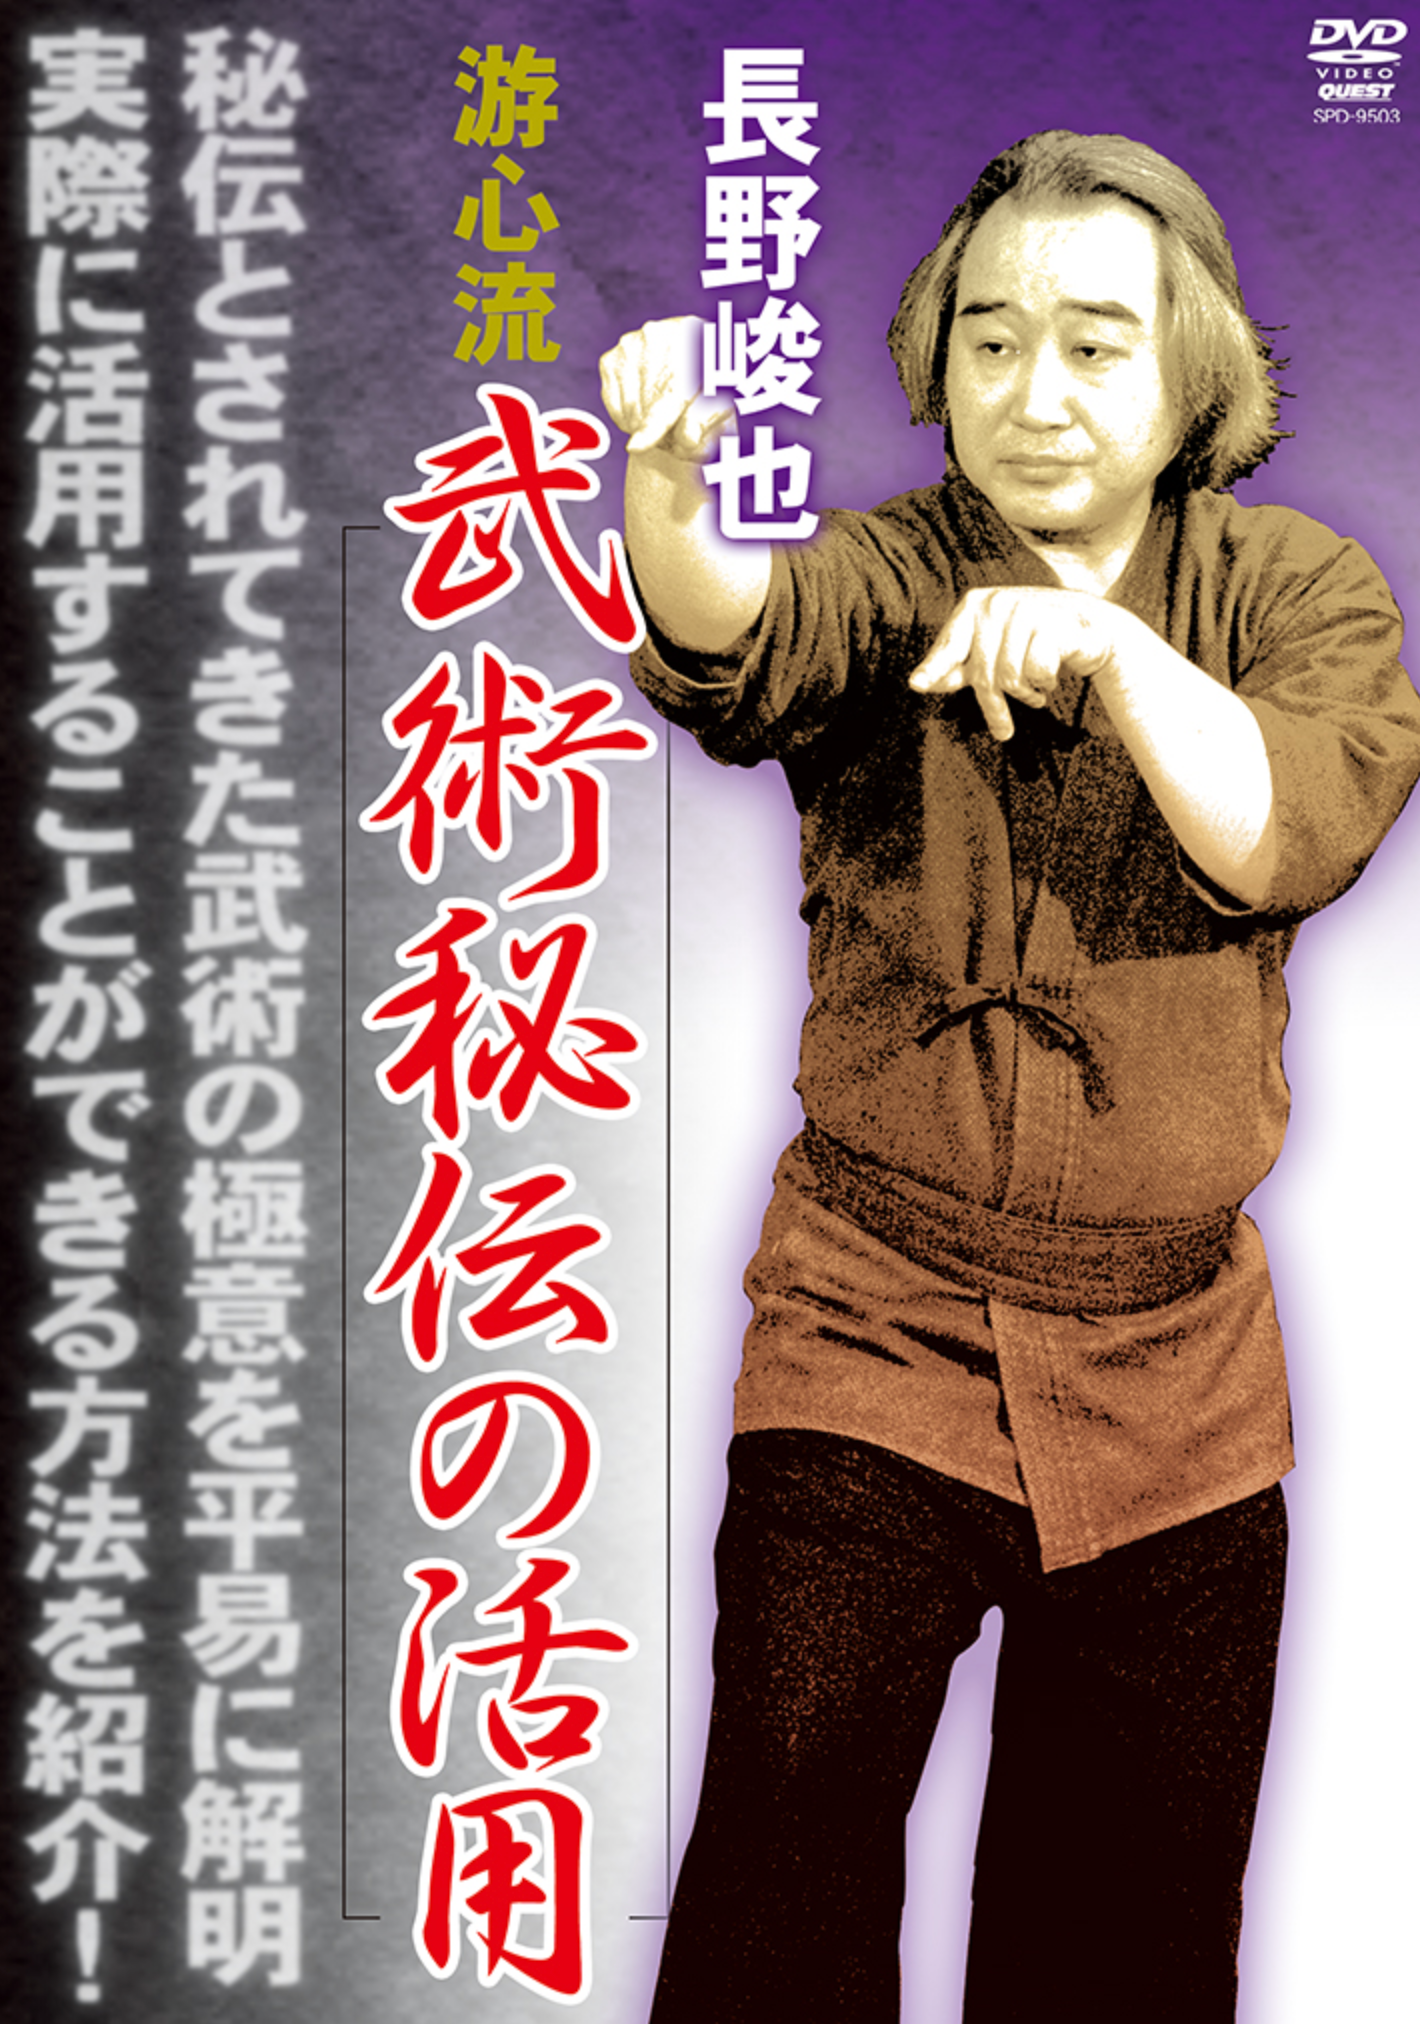 Yushin Ryu Martial Arts Secrets DVD with Shunya Nagano - Budovideos Inc